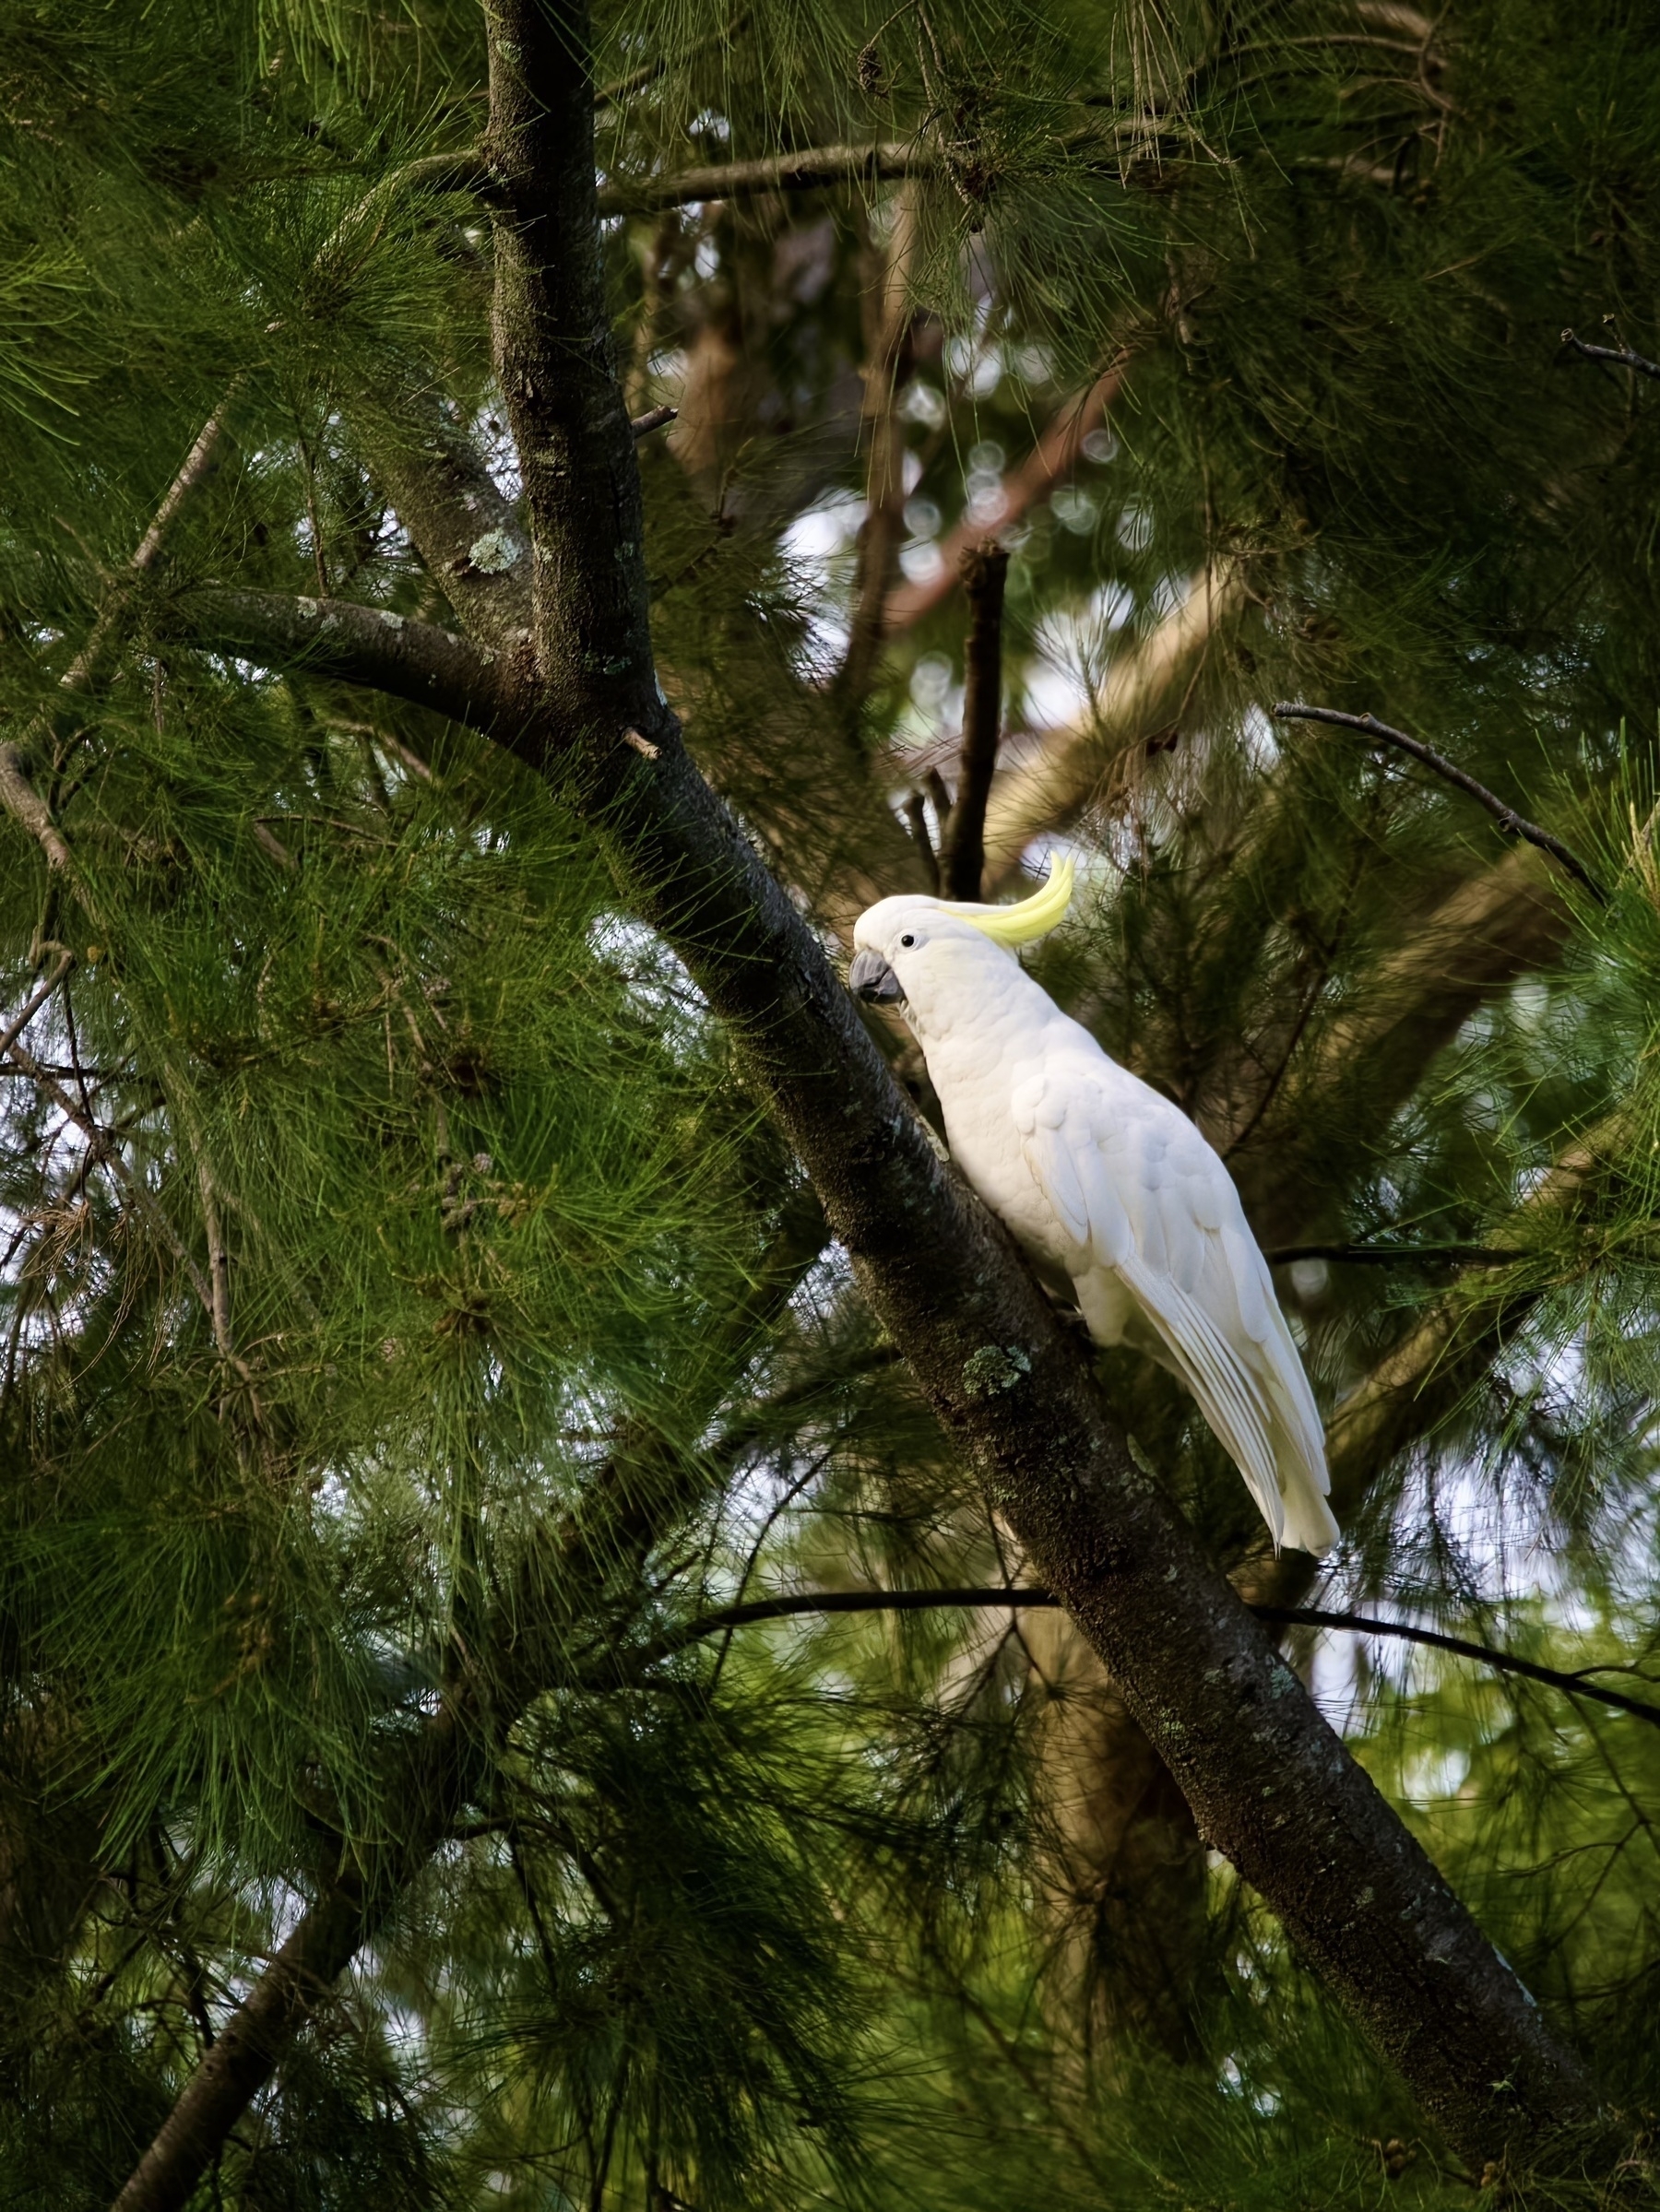 A sulphur-crested cockatoo climbs a tree branch.